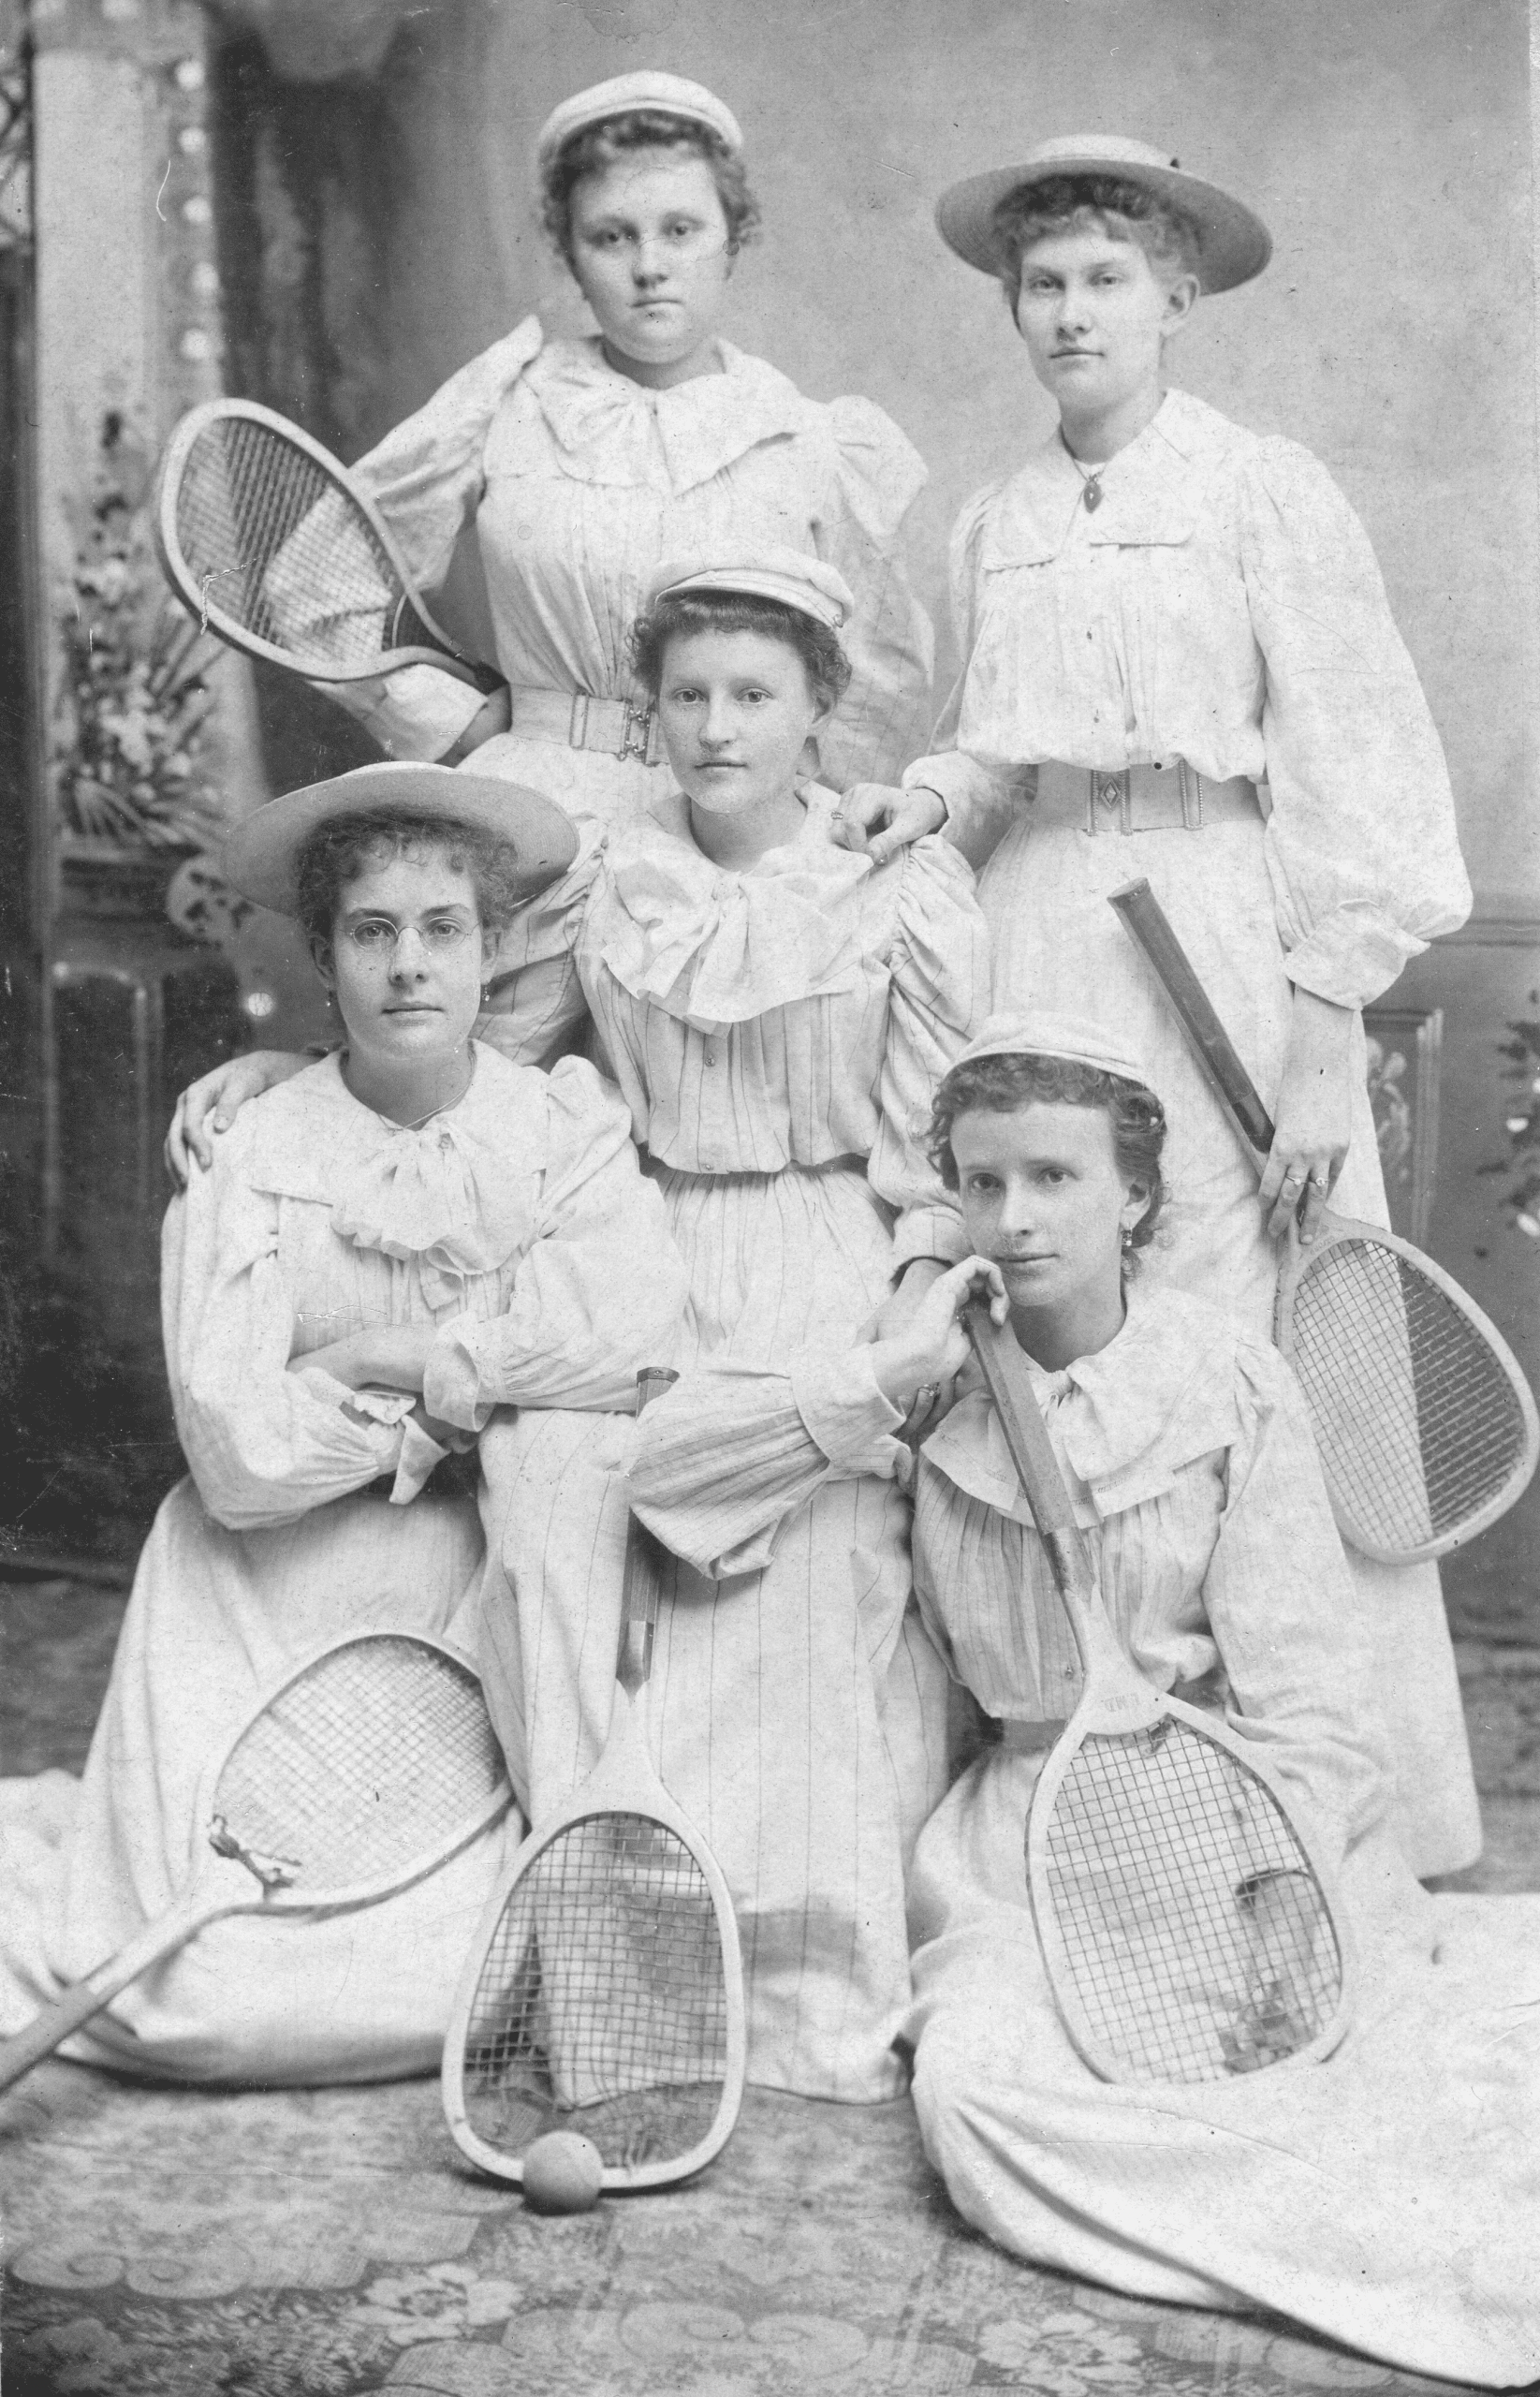 1900’s – Newport Tennis Club